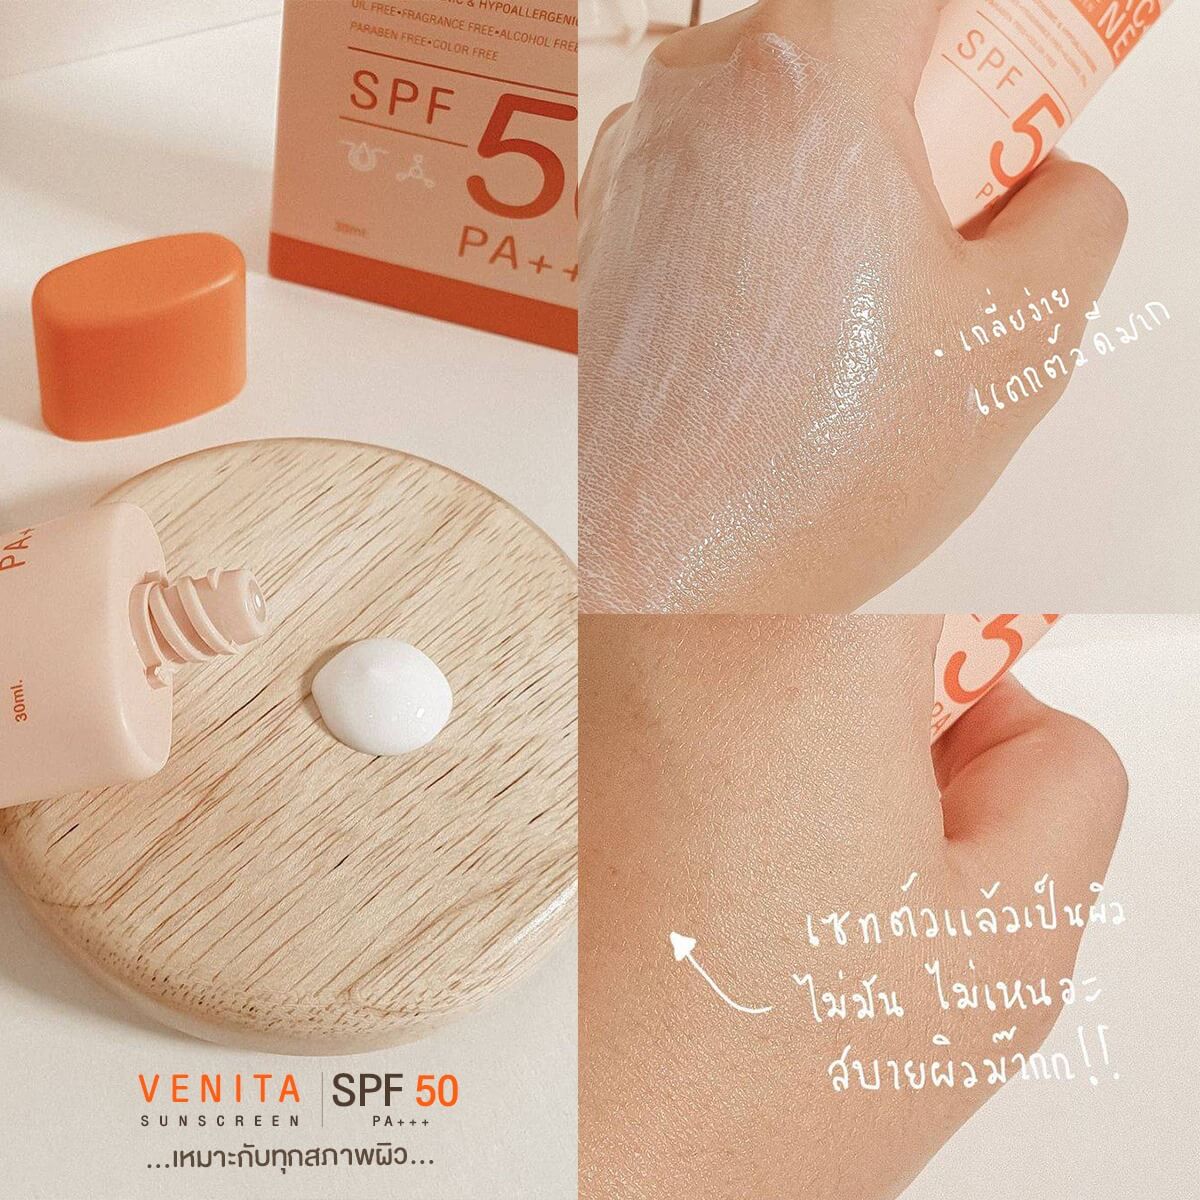 Venita Anti-acne Care Sunscreen SPF50 PA+++ 30 ml เนื้อครีมเจลบางเบา​ ซึมเร็ว​ เกลี่ยง่าย​ ไม่เหนียว​เหนอะหนะ​ 